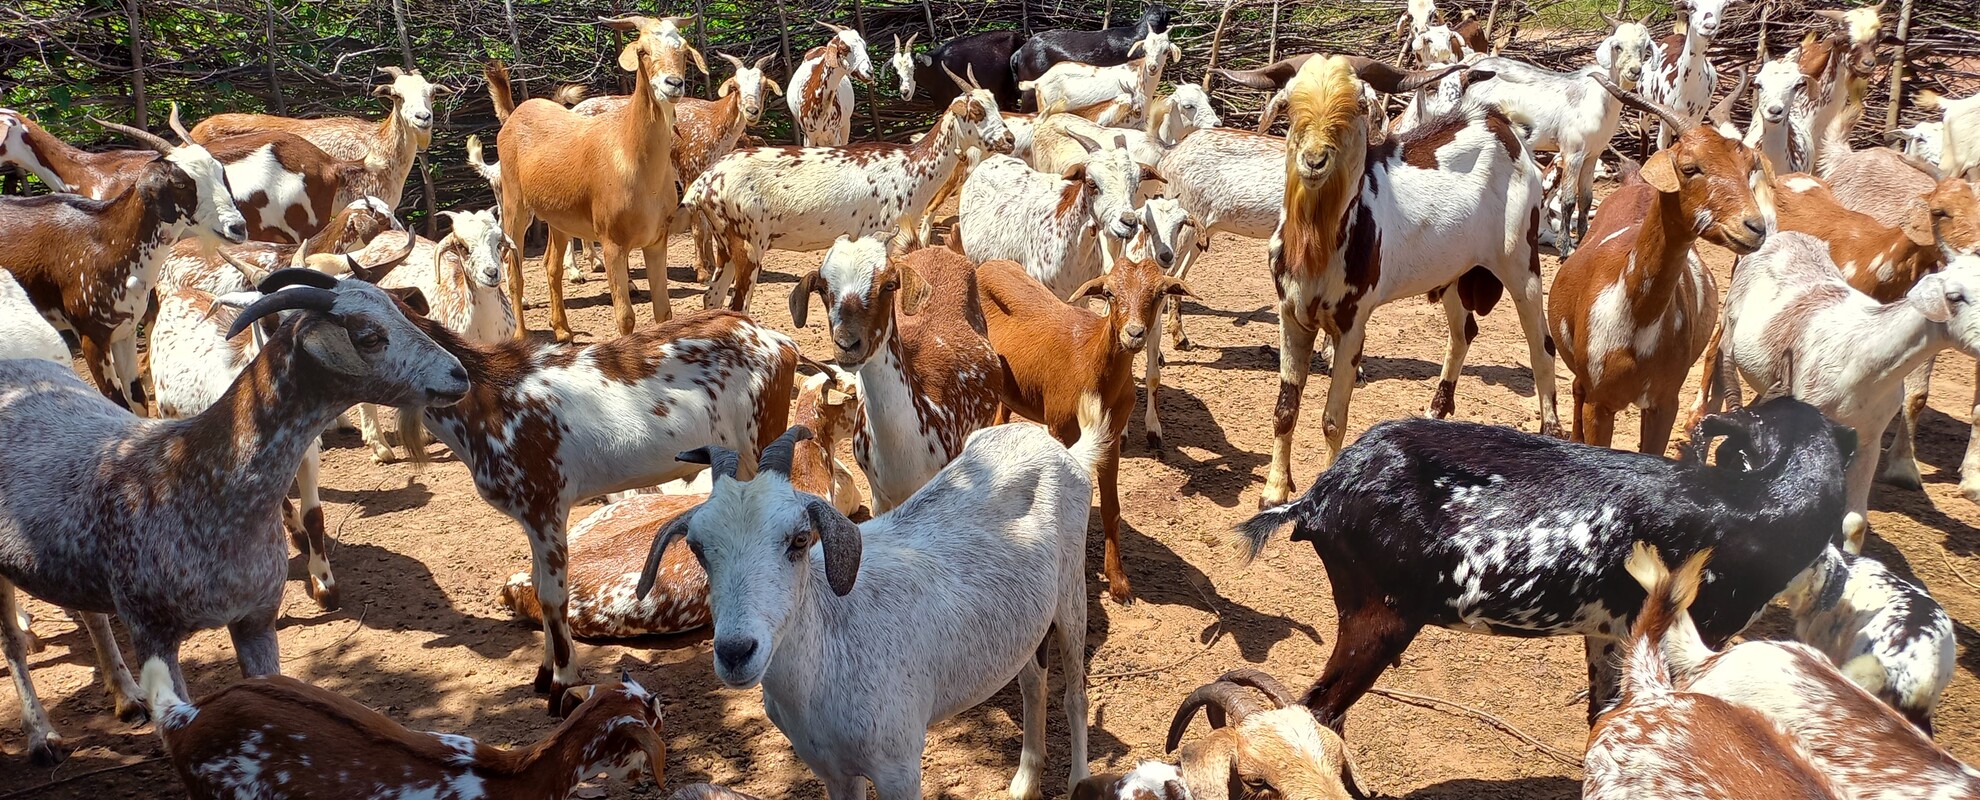 Goats in Mali